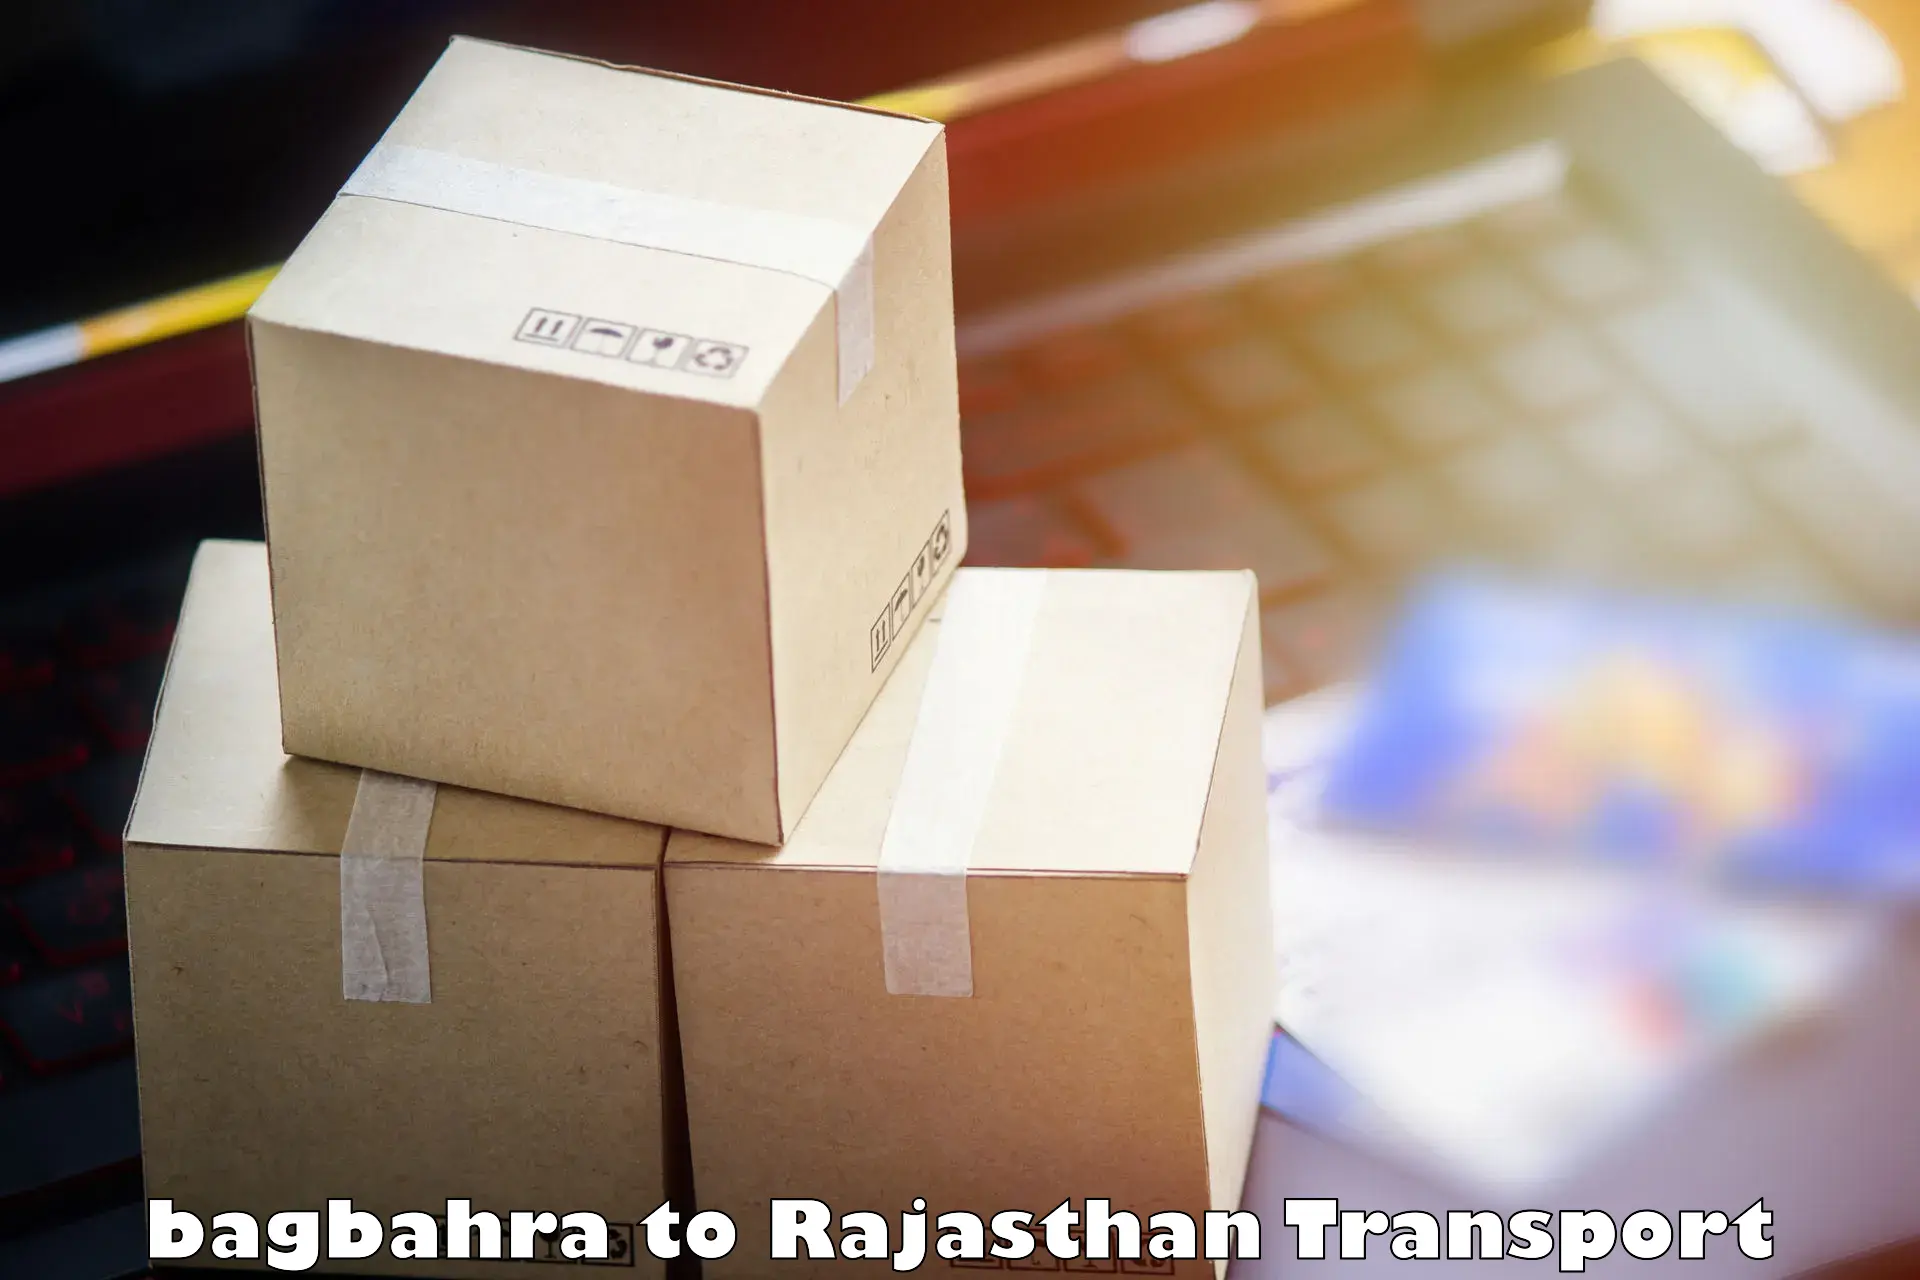 Container transport service bagbahra to Kapasan